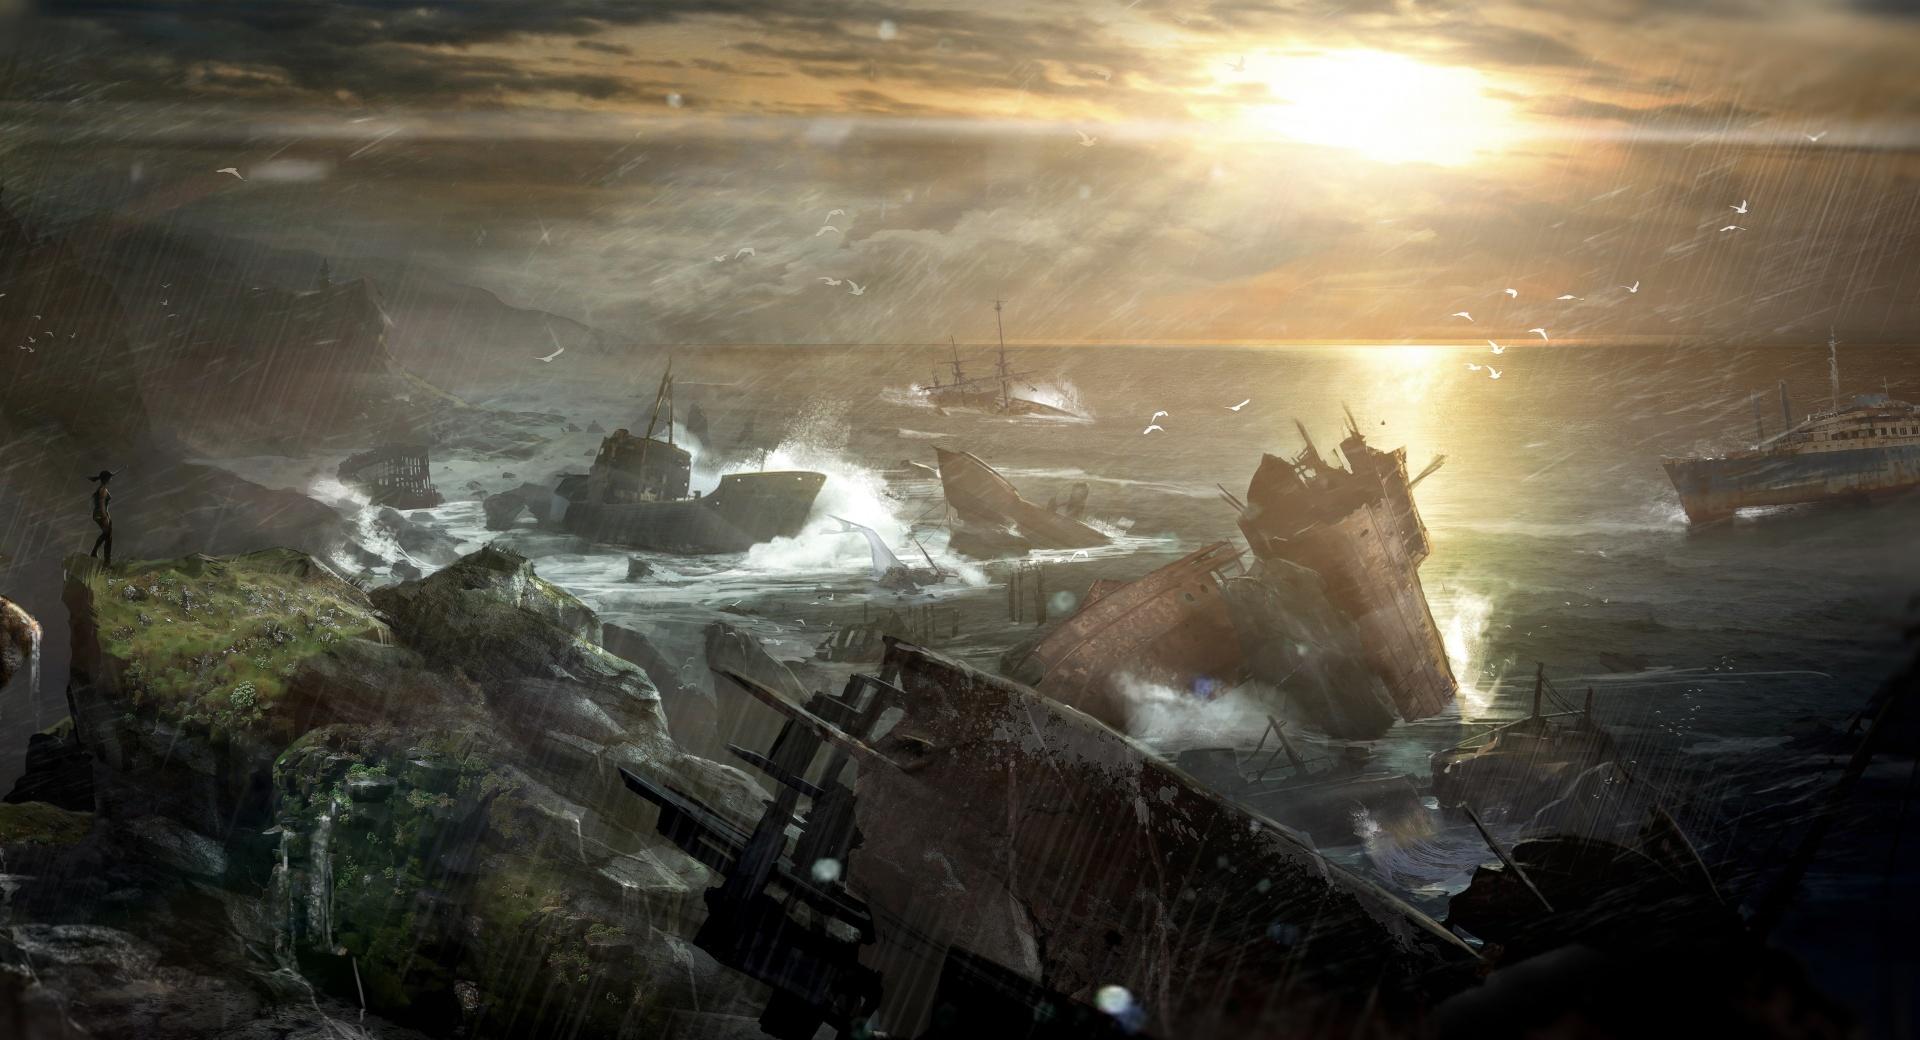 Tomb Raider 2012 Video Game - Shipwreck Vista at 1024 x 1024 iPad size wallpapers HD quality